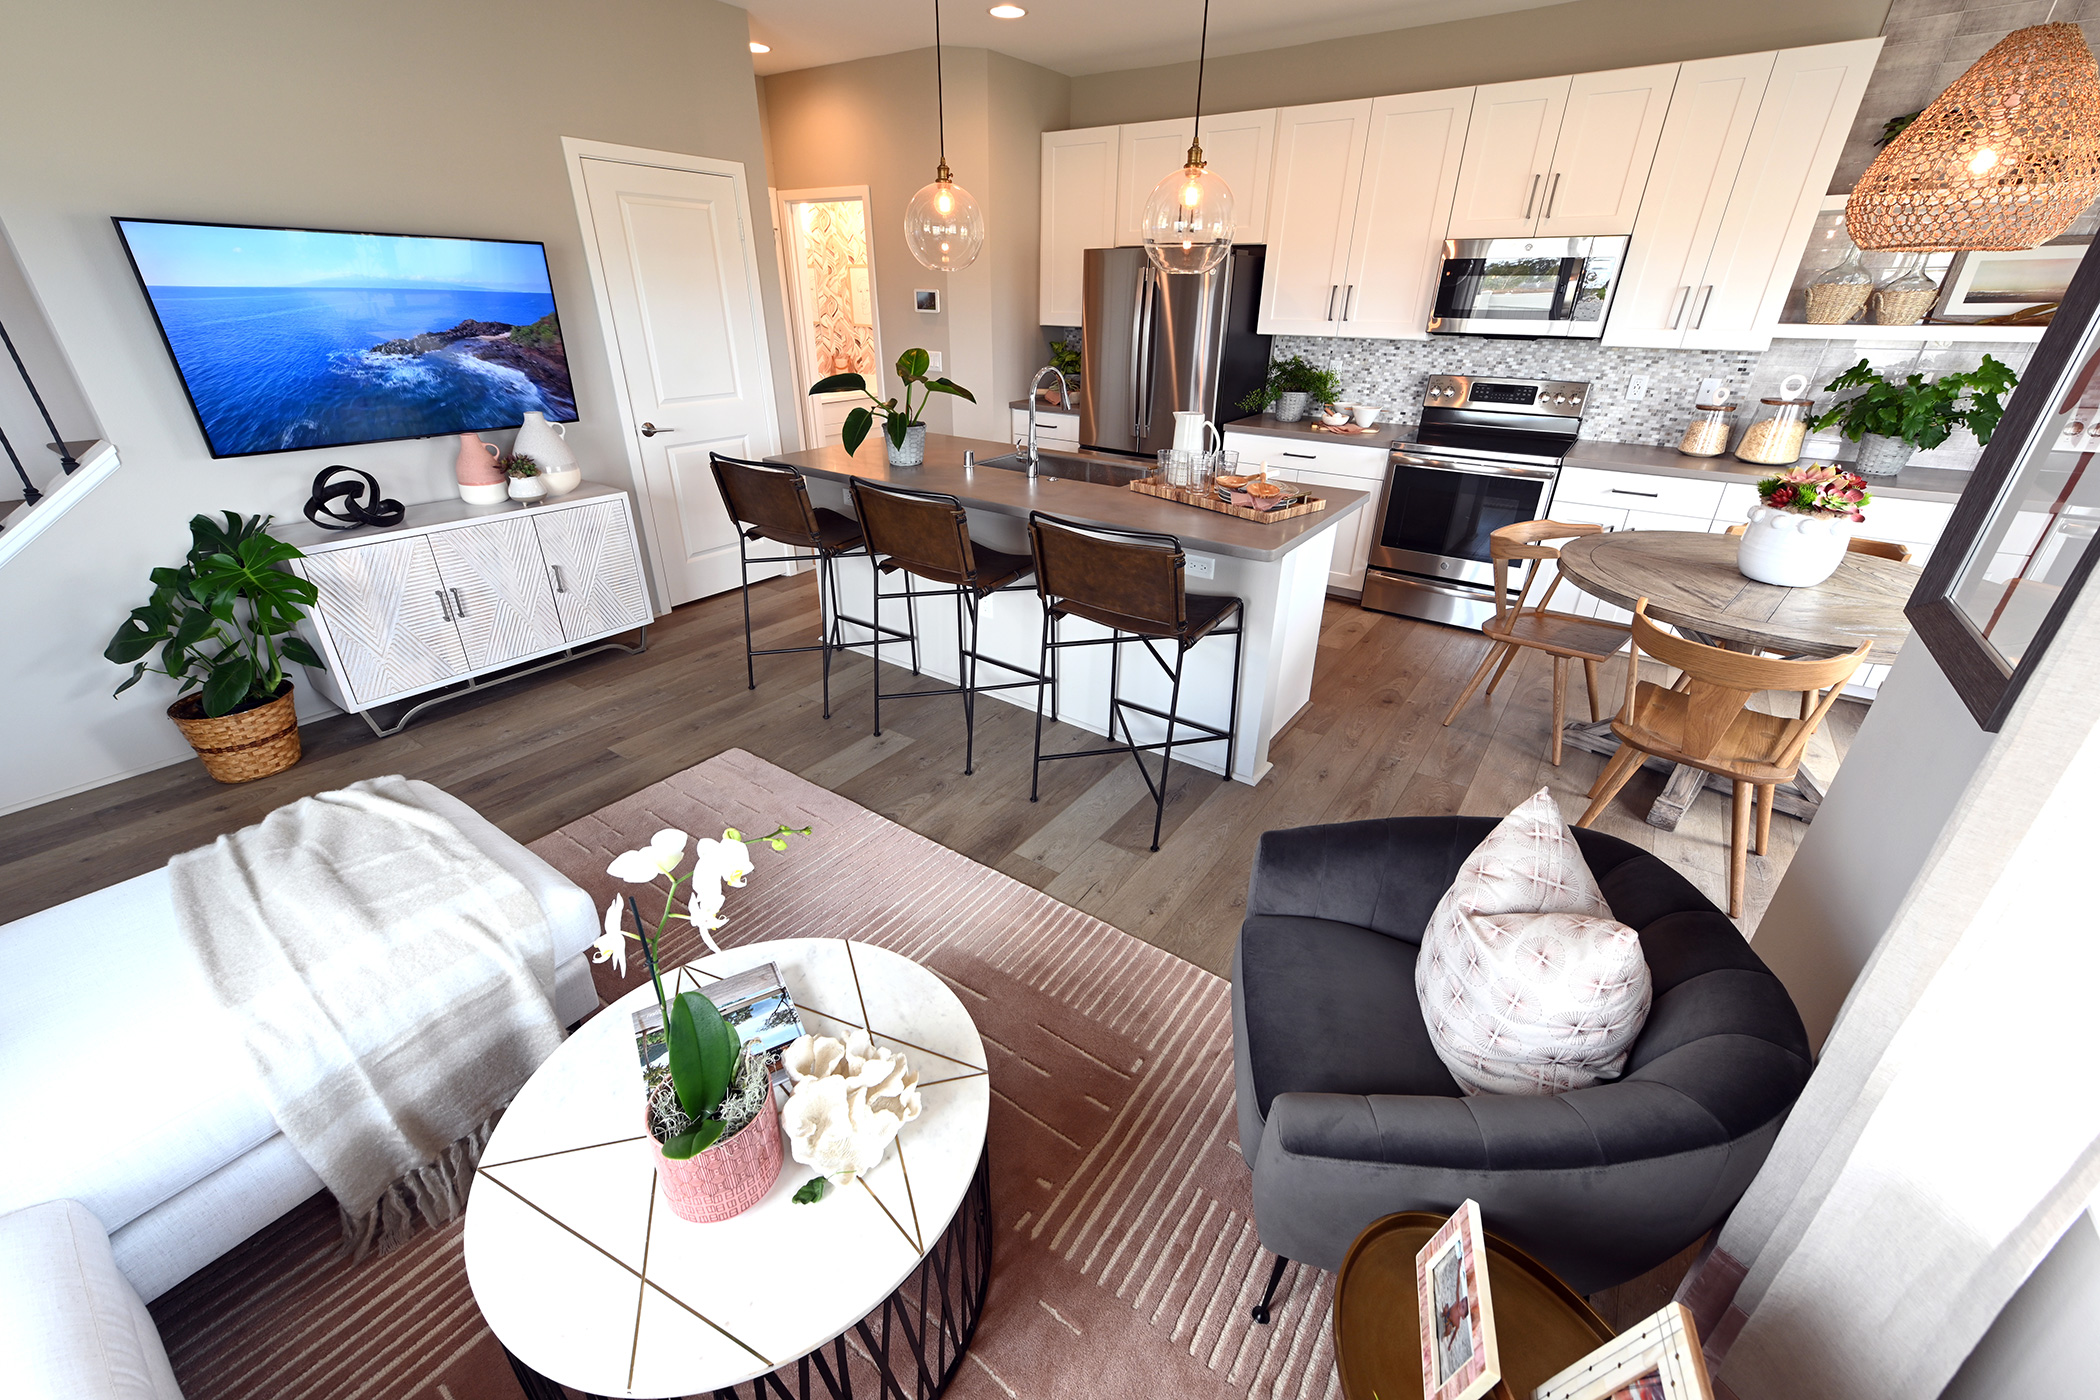 NorthPark Plan 4 - Kitchen & Living Room